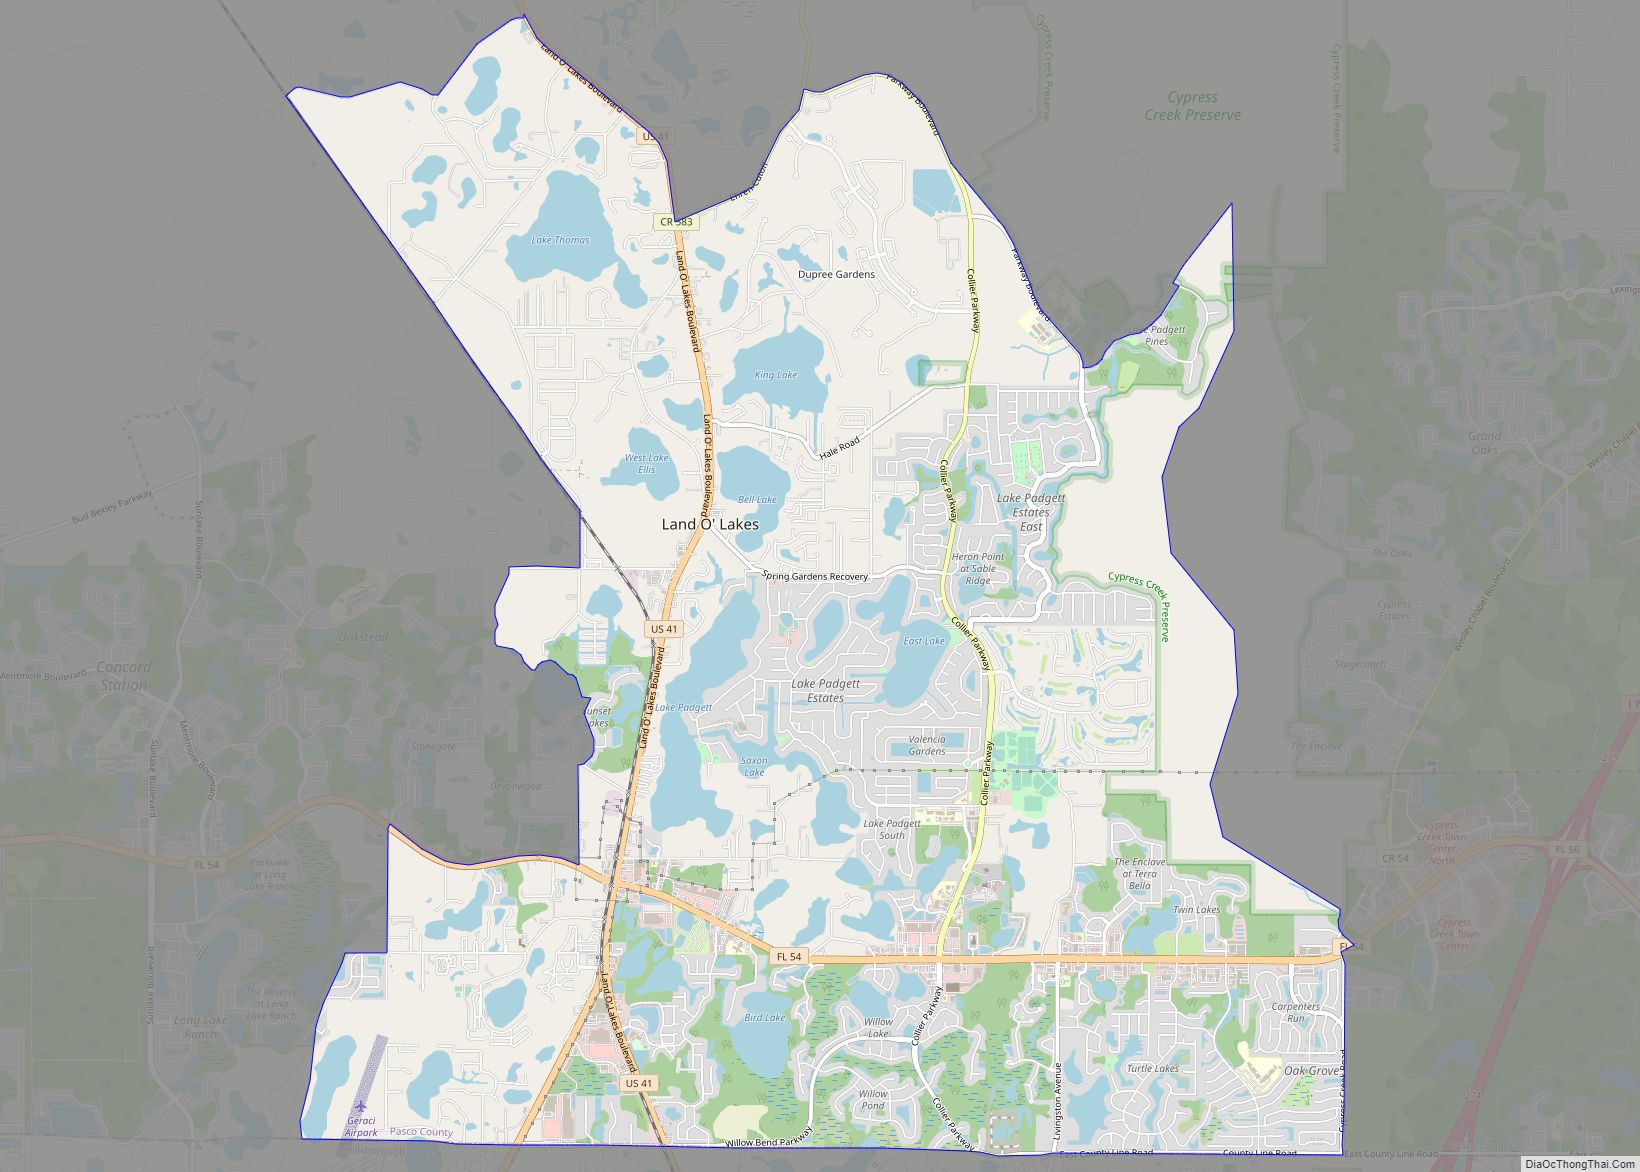 Map of Land O' Lakes CDP